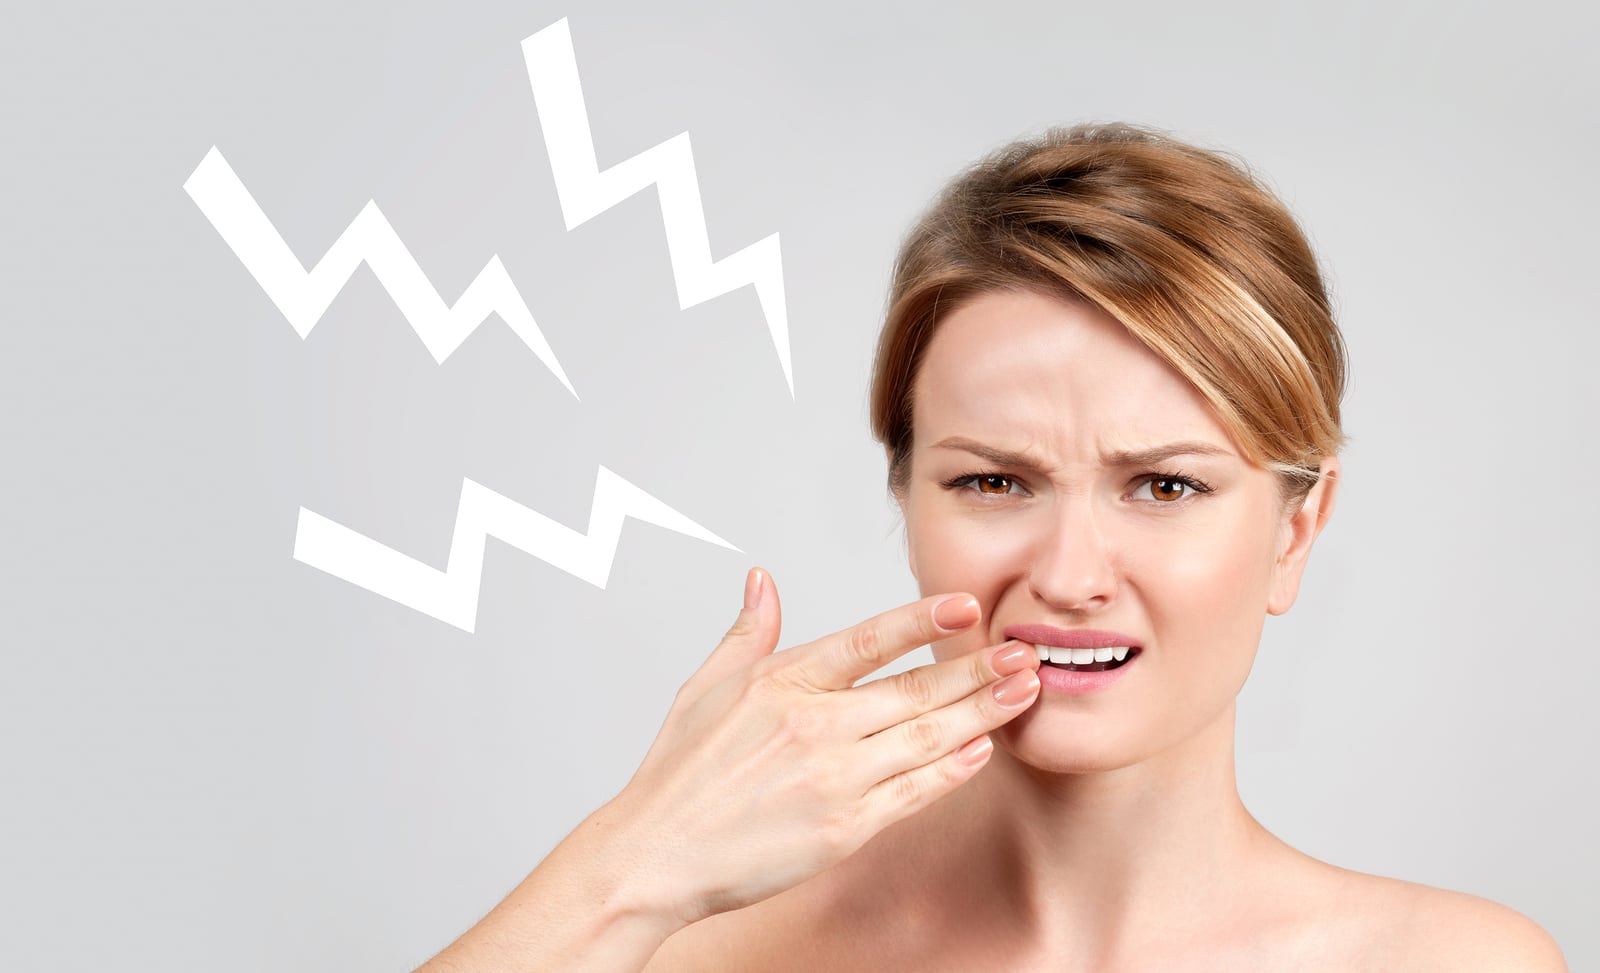 Totul despre parodontoza. Leacuri naturiste sau tratamente complexe in cabinetul stomatologic?